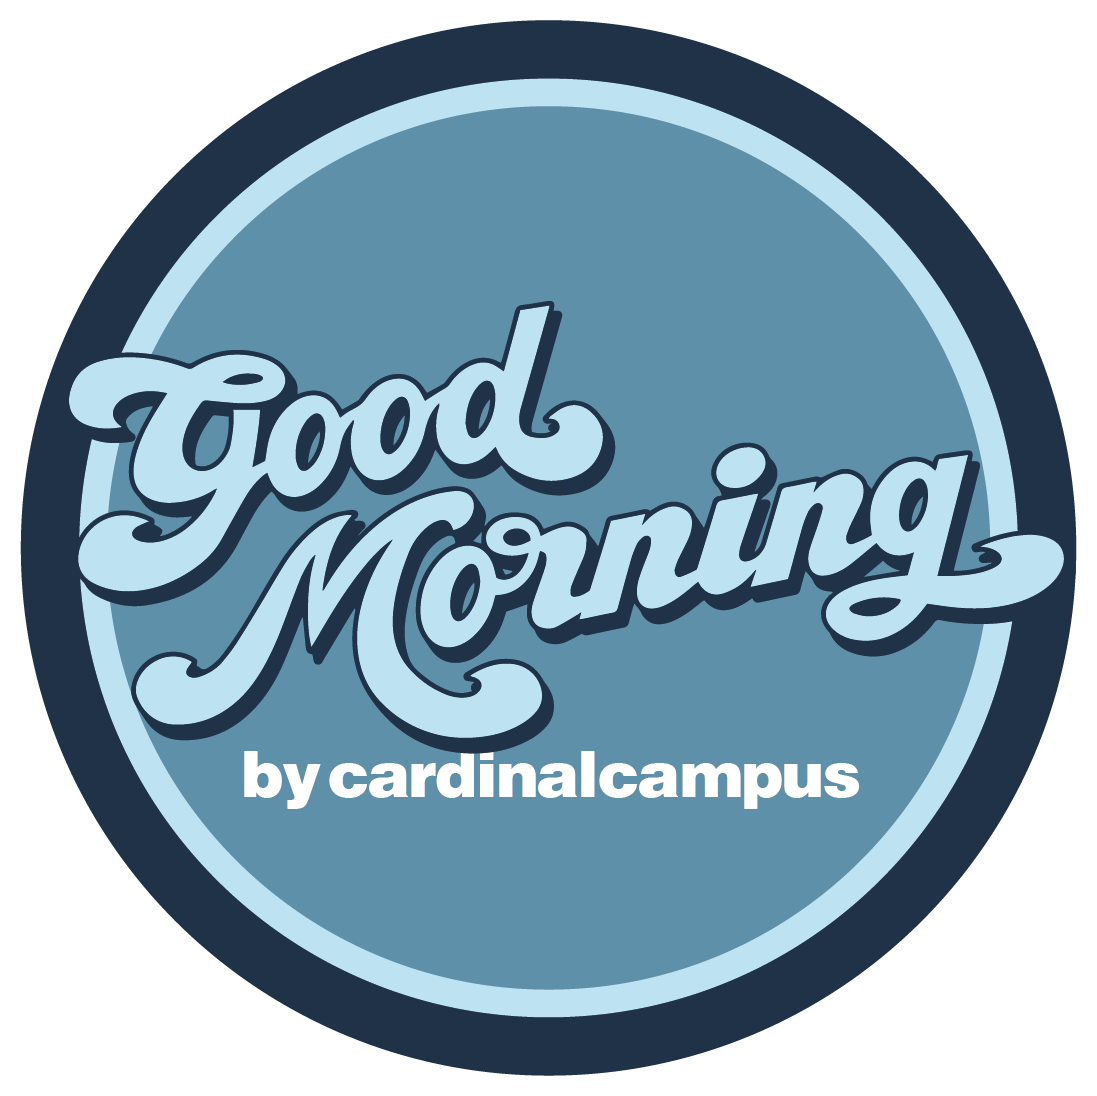 Good Morning by Cardinal Campus